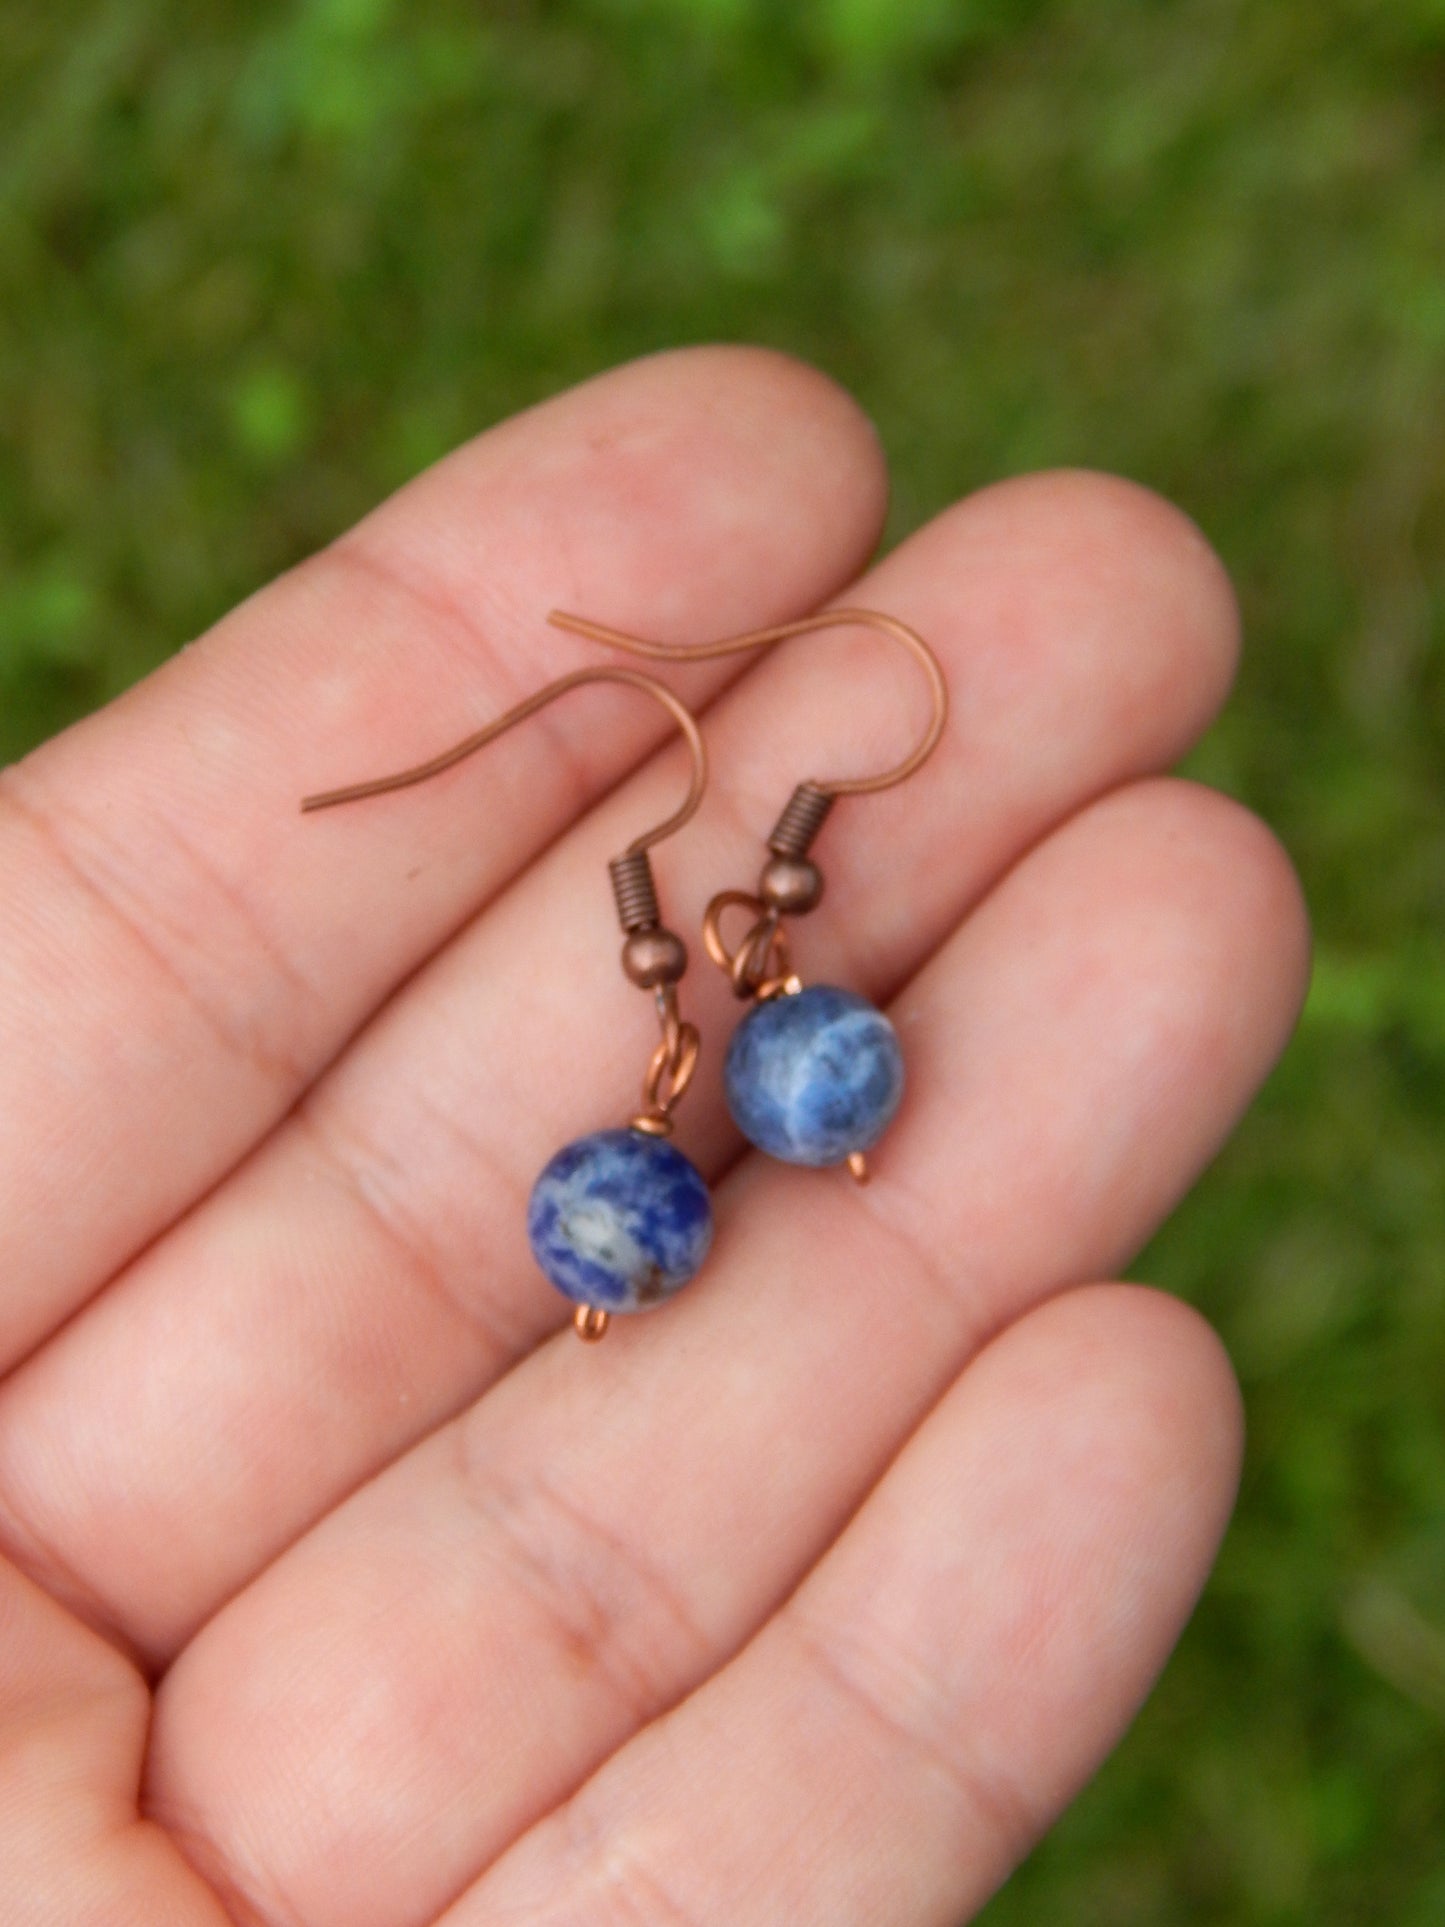 Sodalite earrings